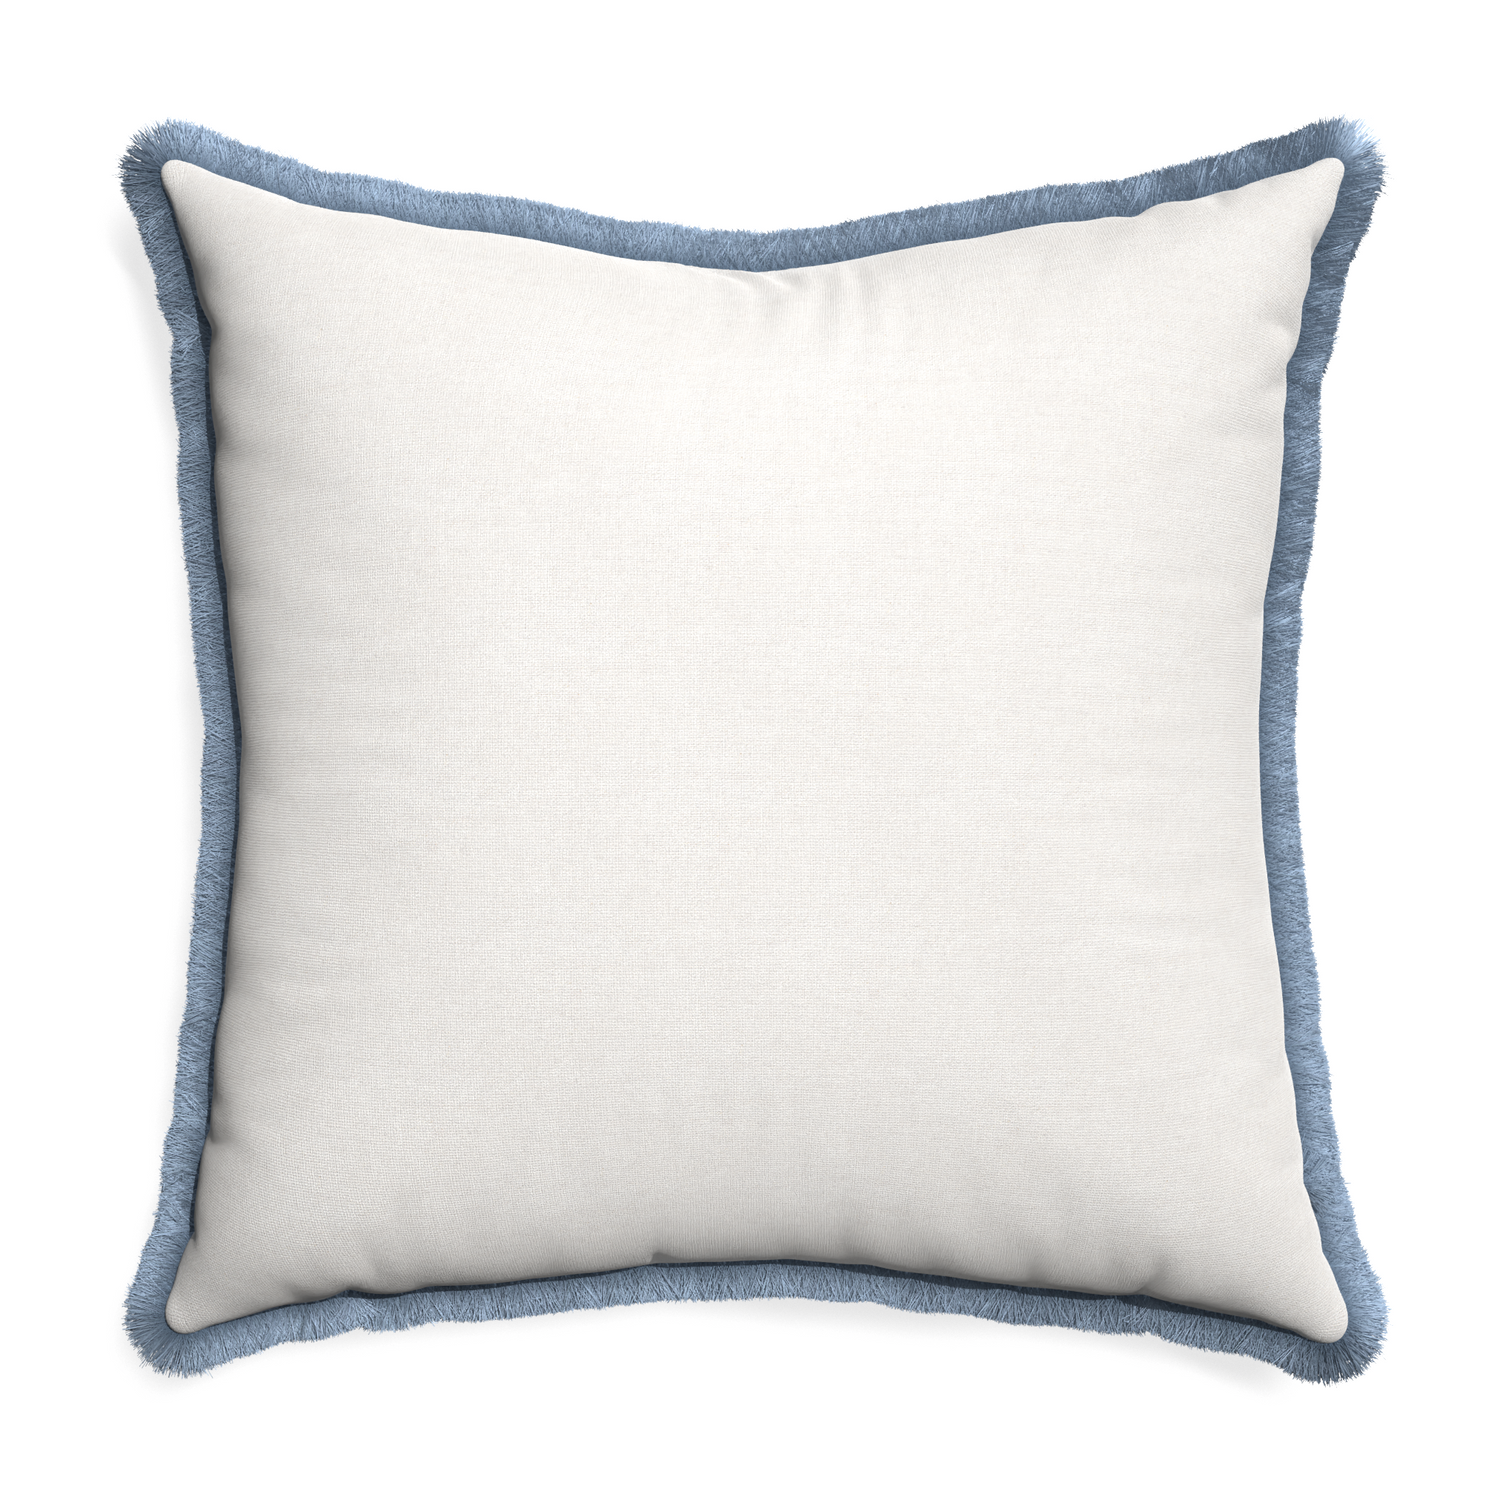 Euro-sham flour custom pillow with sky fringe on white background